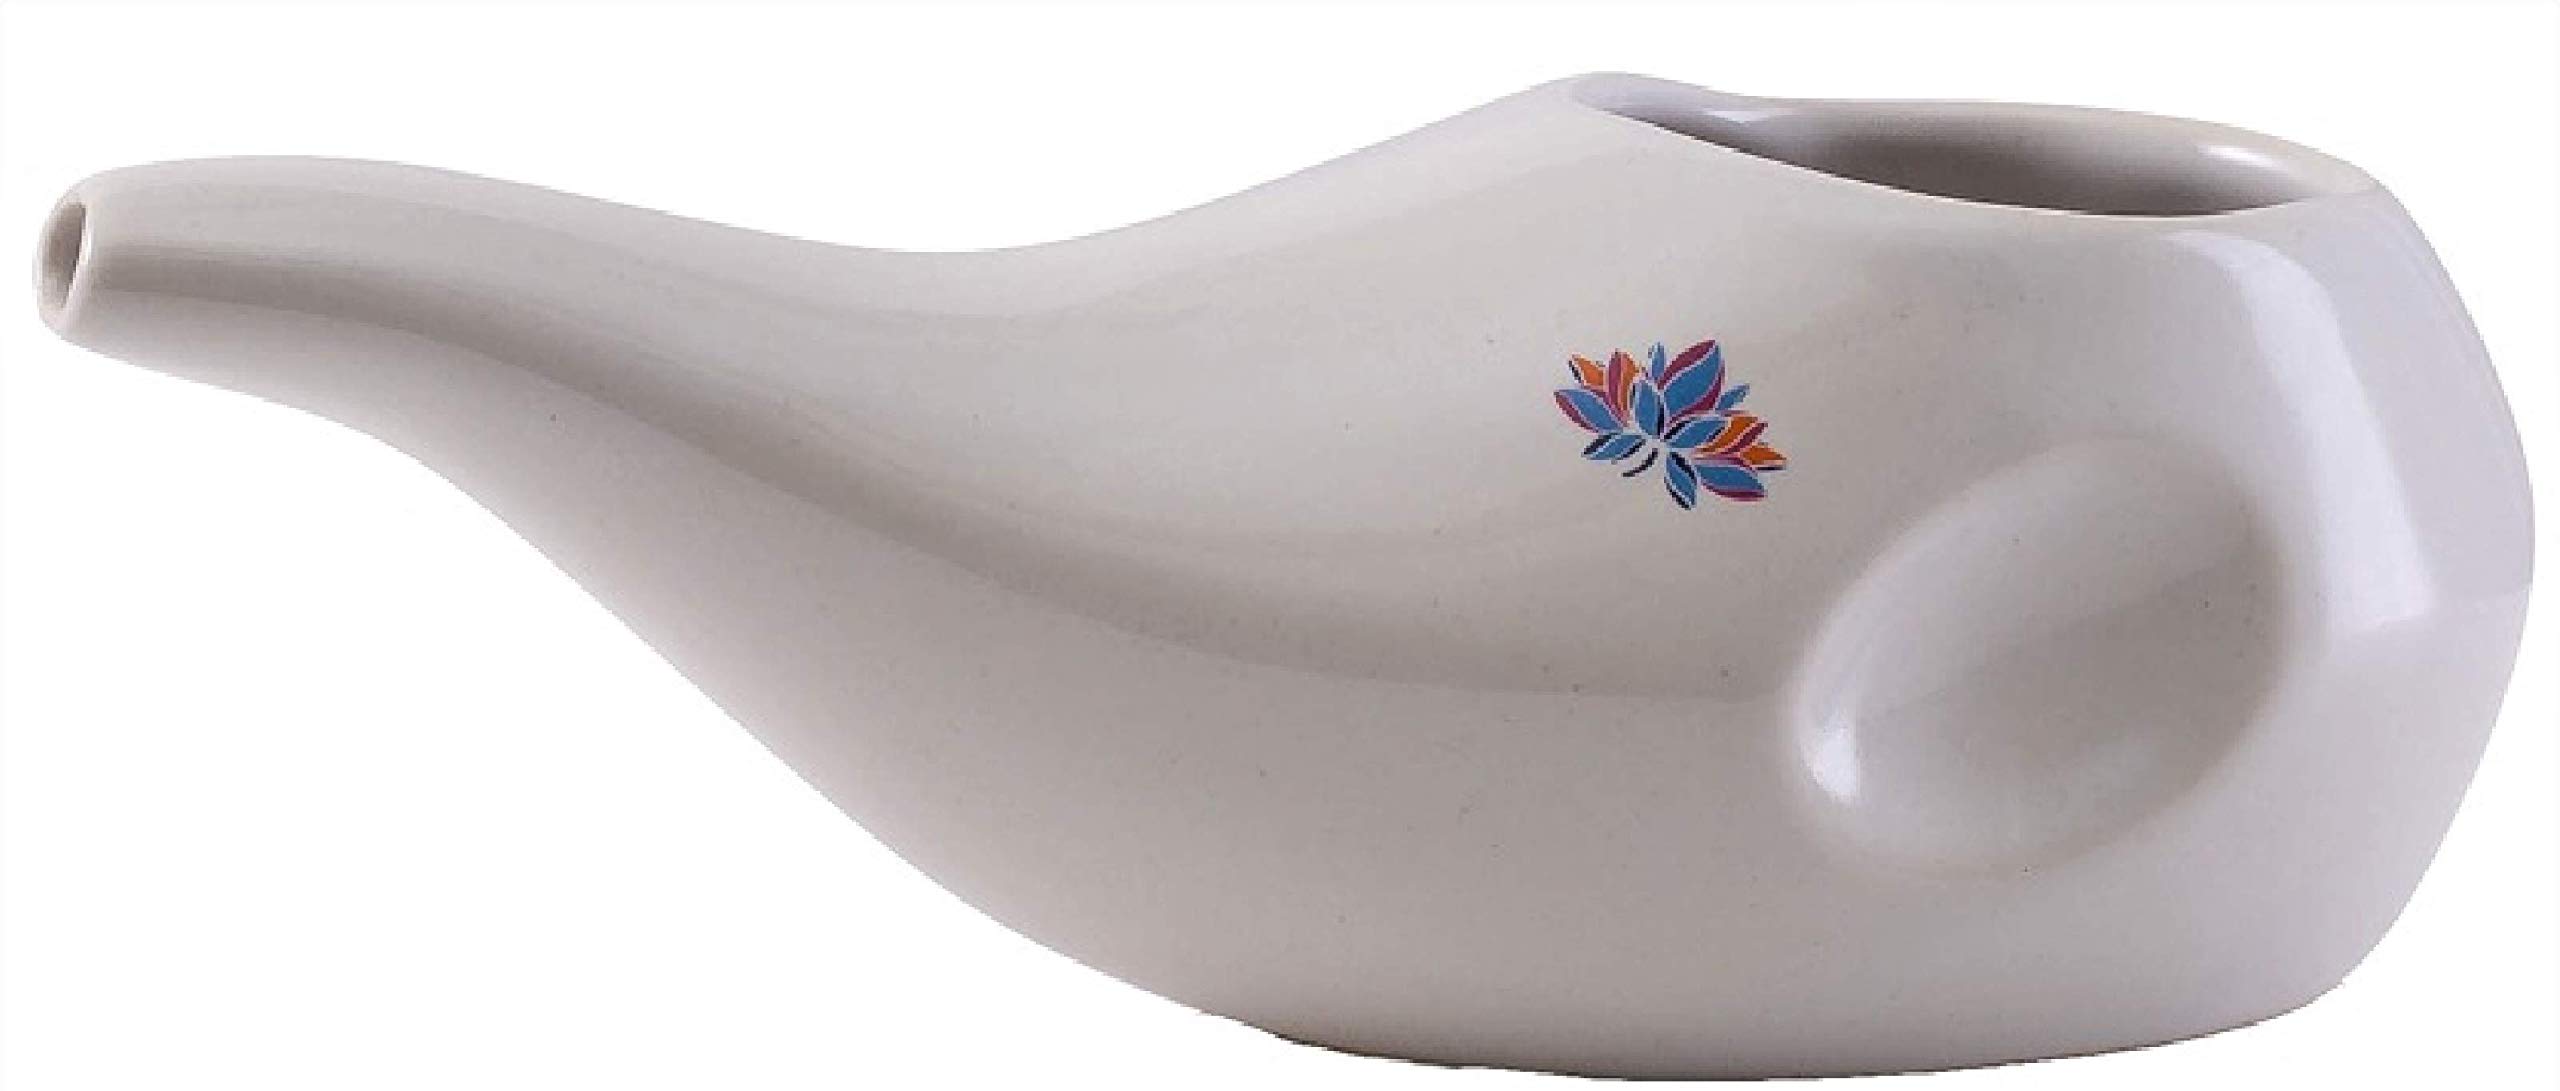 Sattvic Path Keramik-Neti-Kännchen, Nasenspülkännchen, ergonomisch, handgefertigt